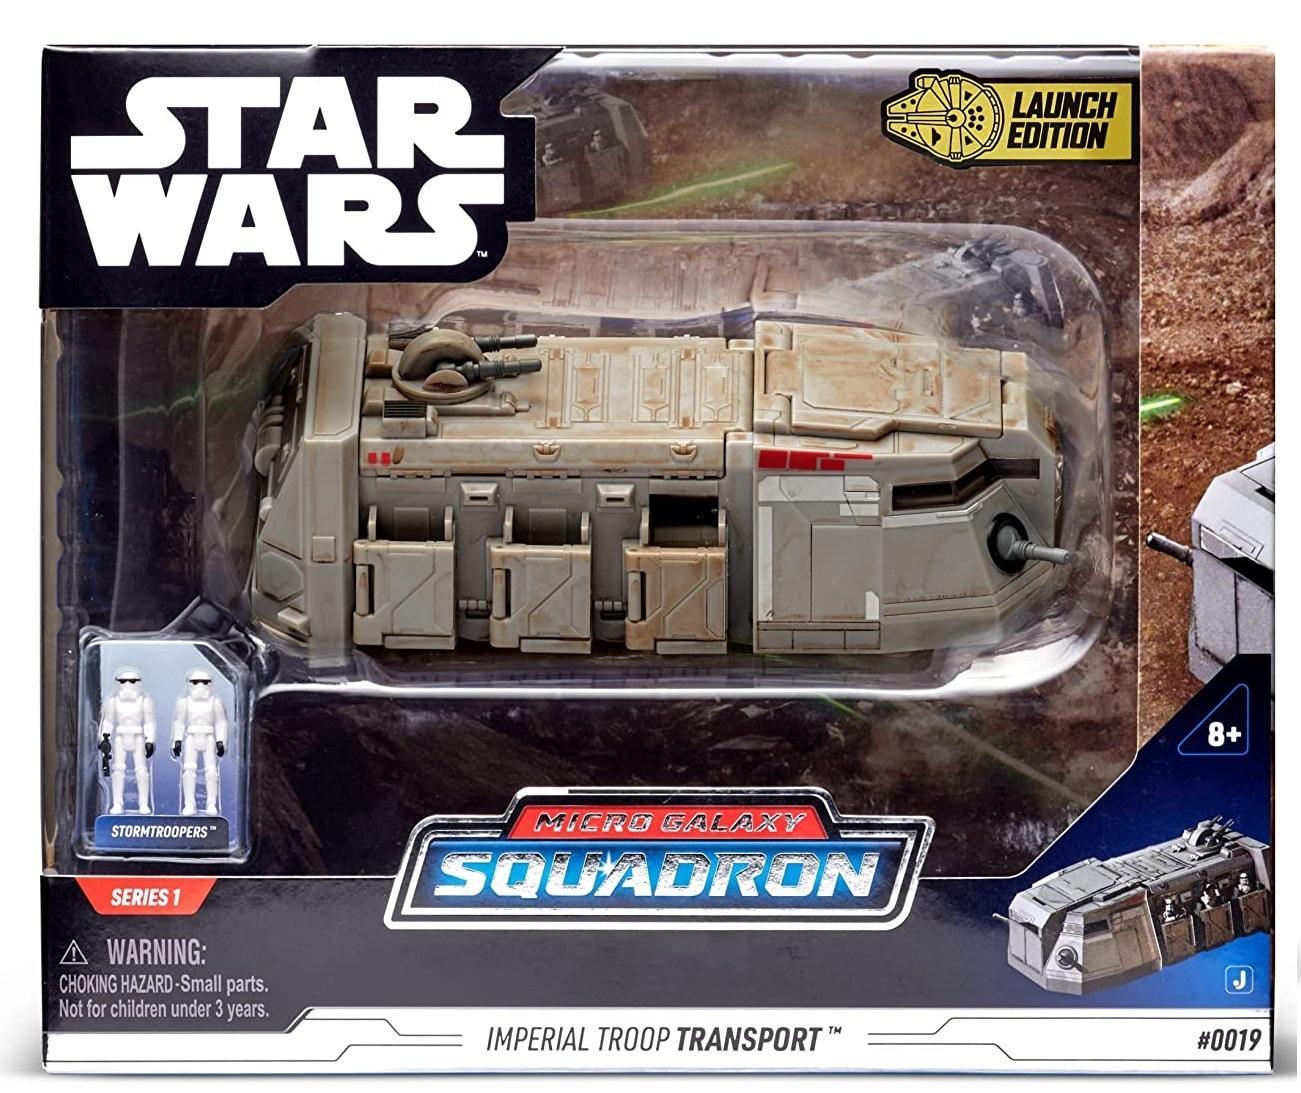 Star Wars: Micro Galaxy Squadron - Troop Transporter